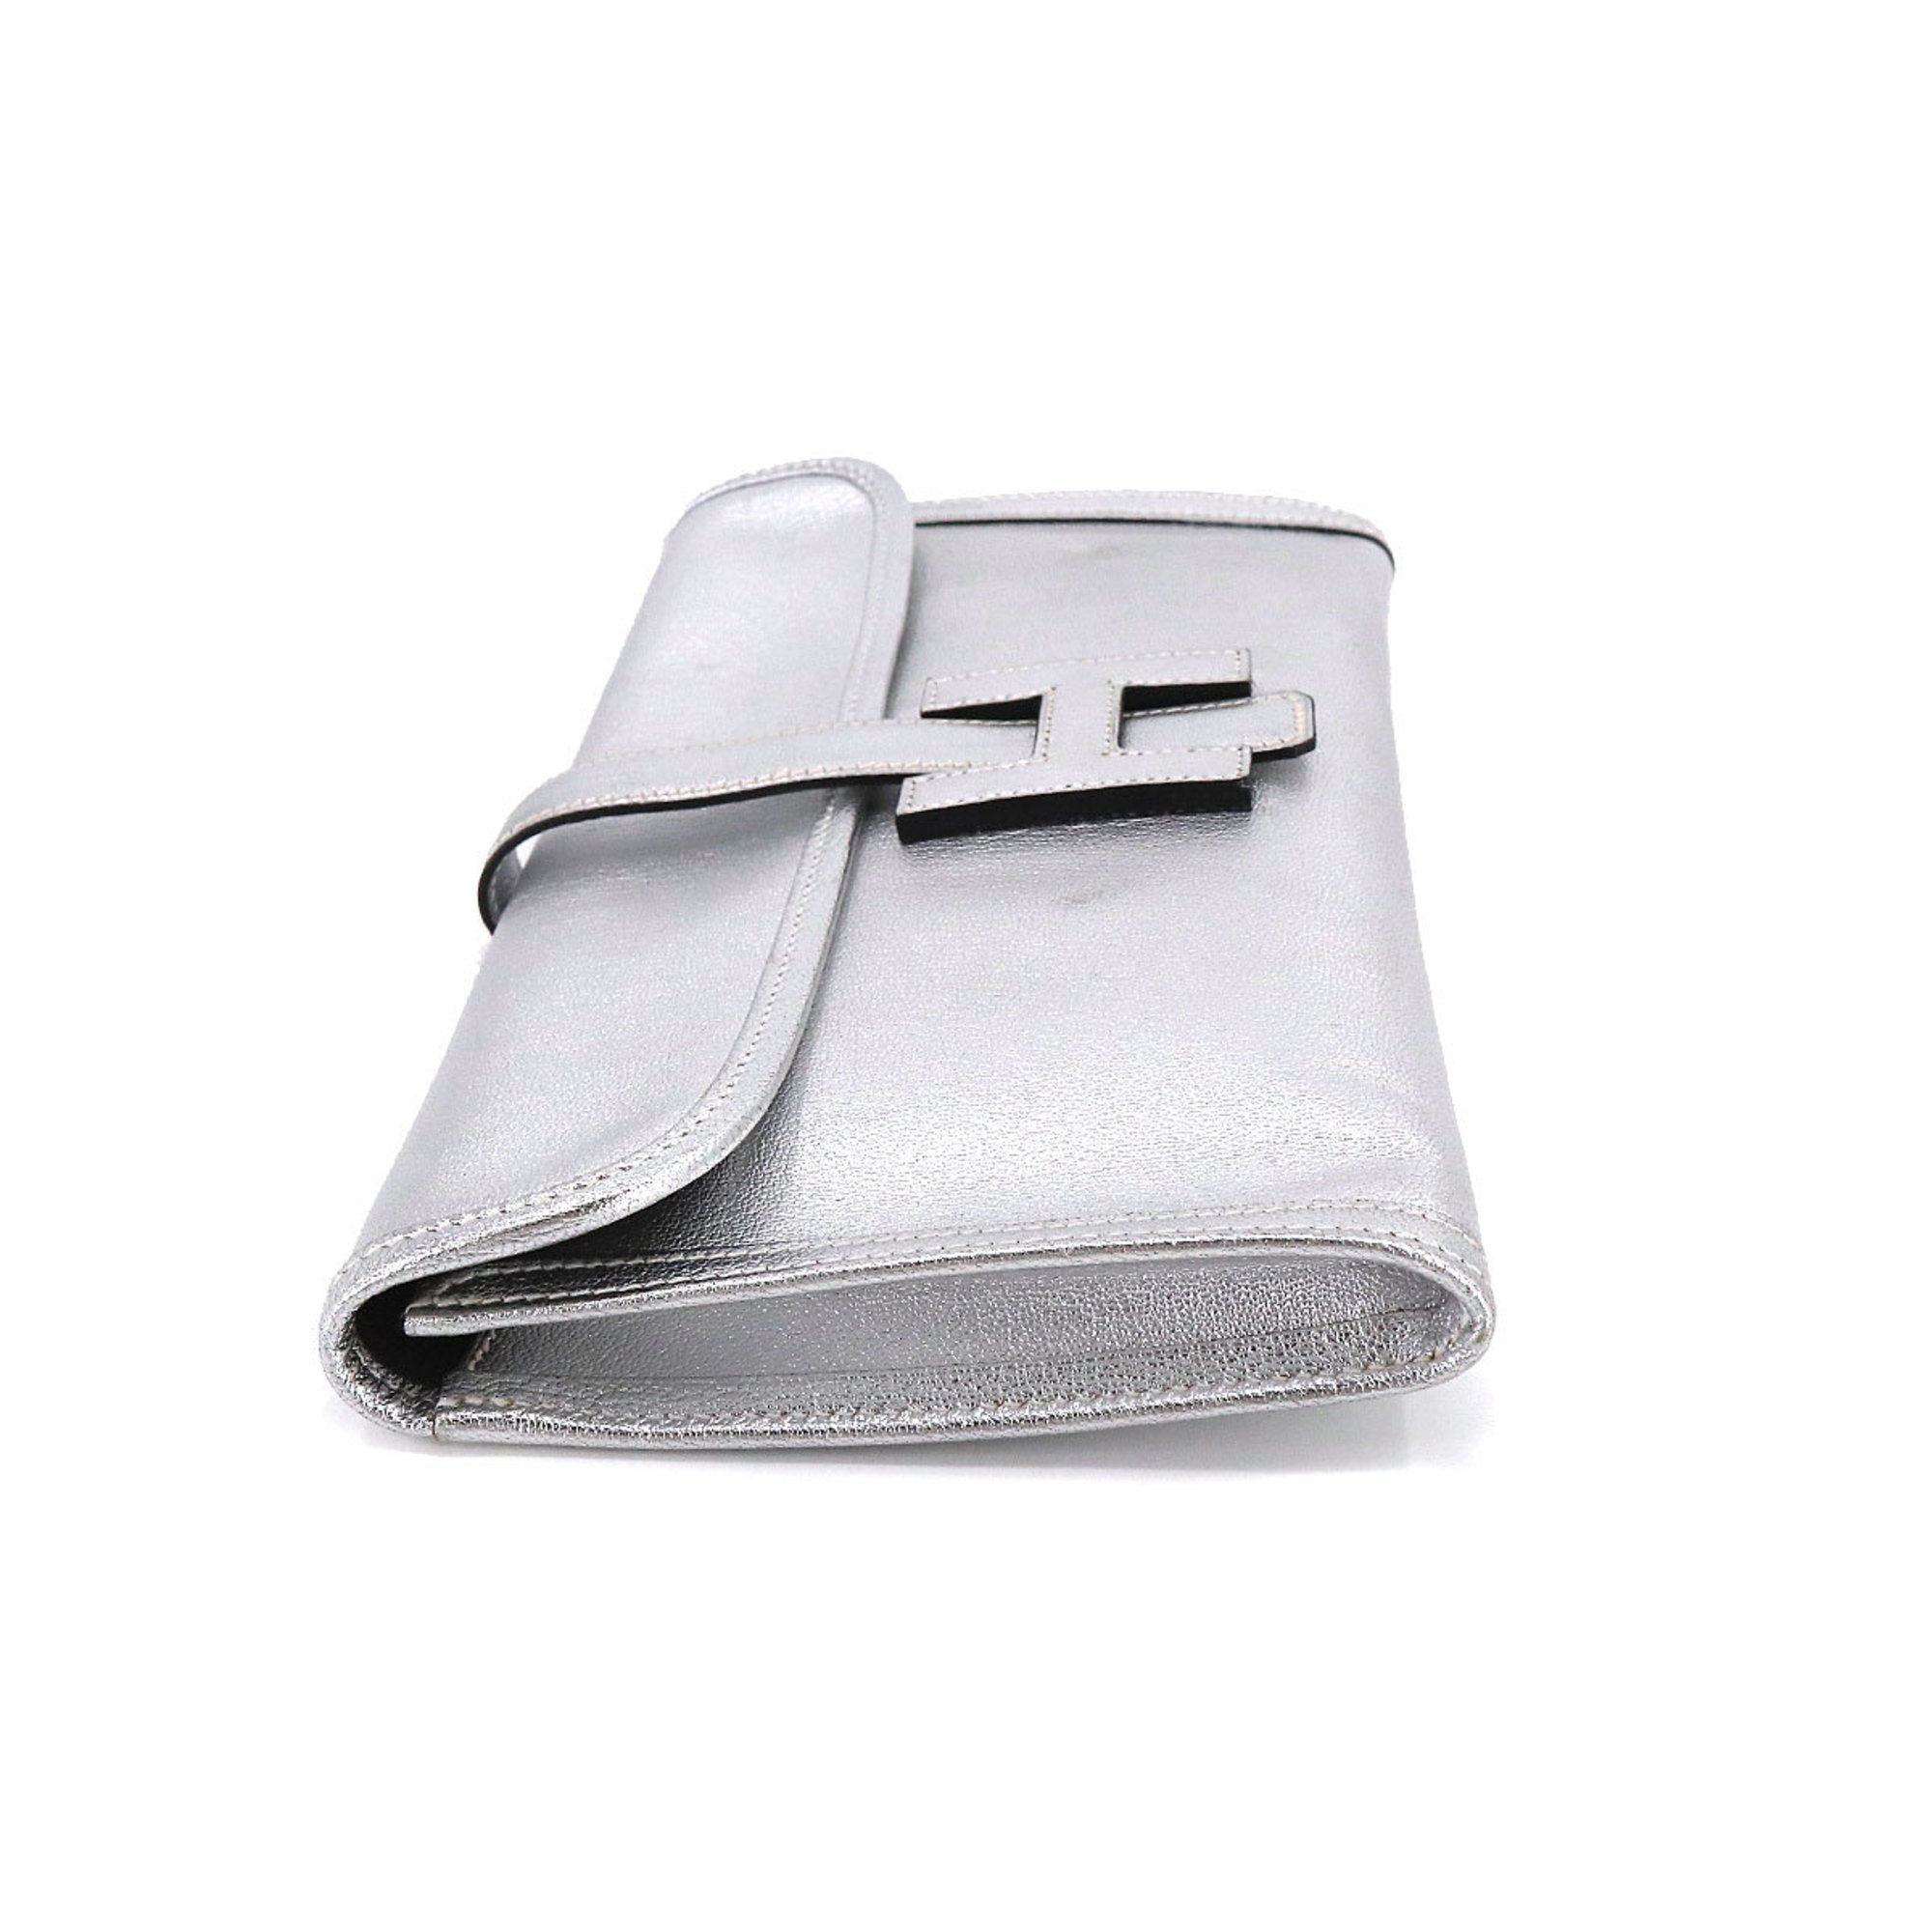 Hermes HERMES Jige Elan clutch bag Swift □H engraved Olympic limited